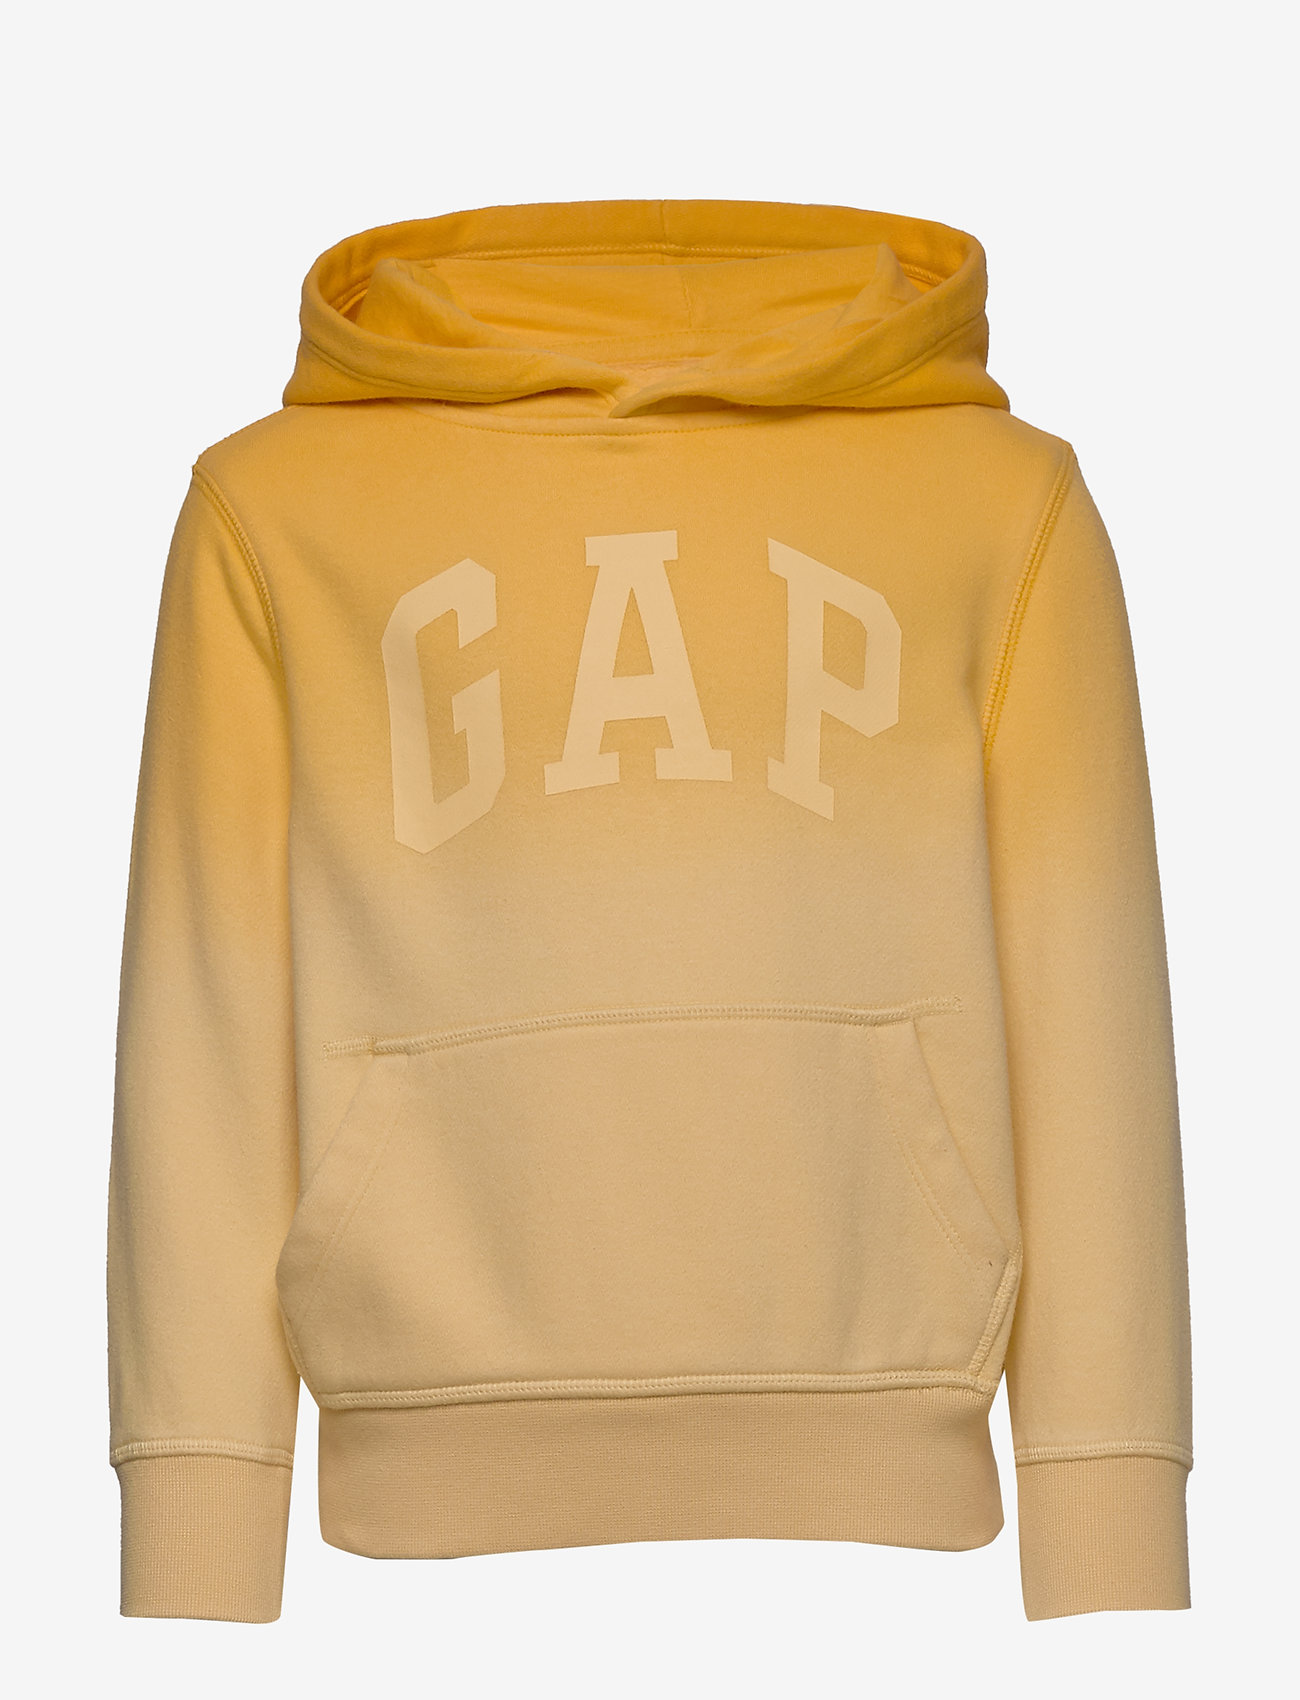 gap orange sweatshirt